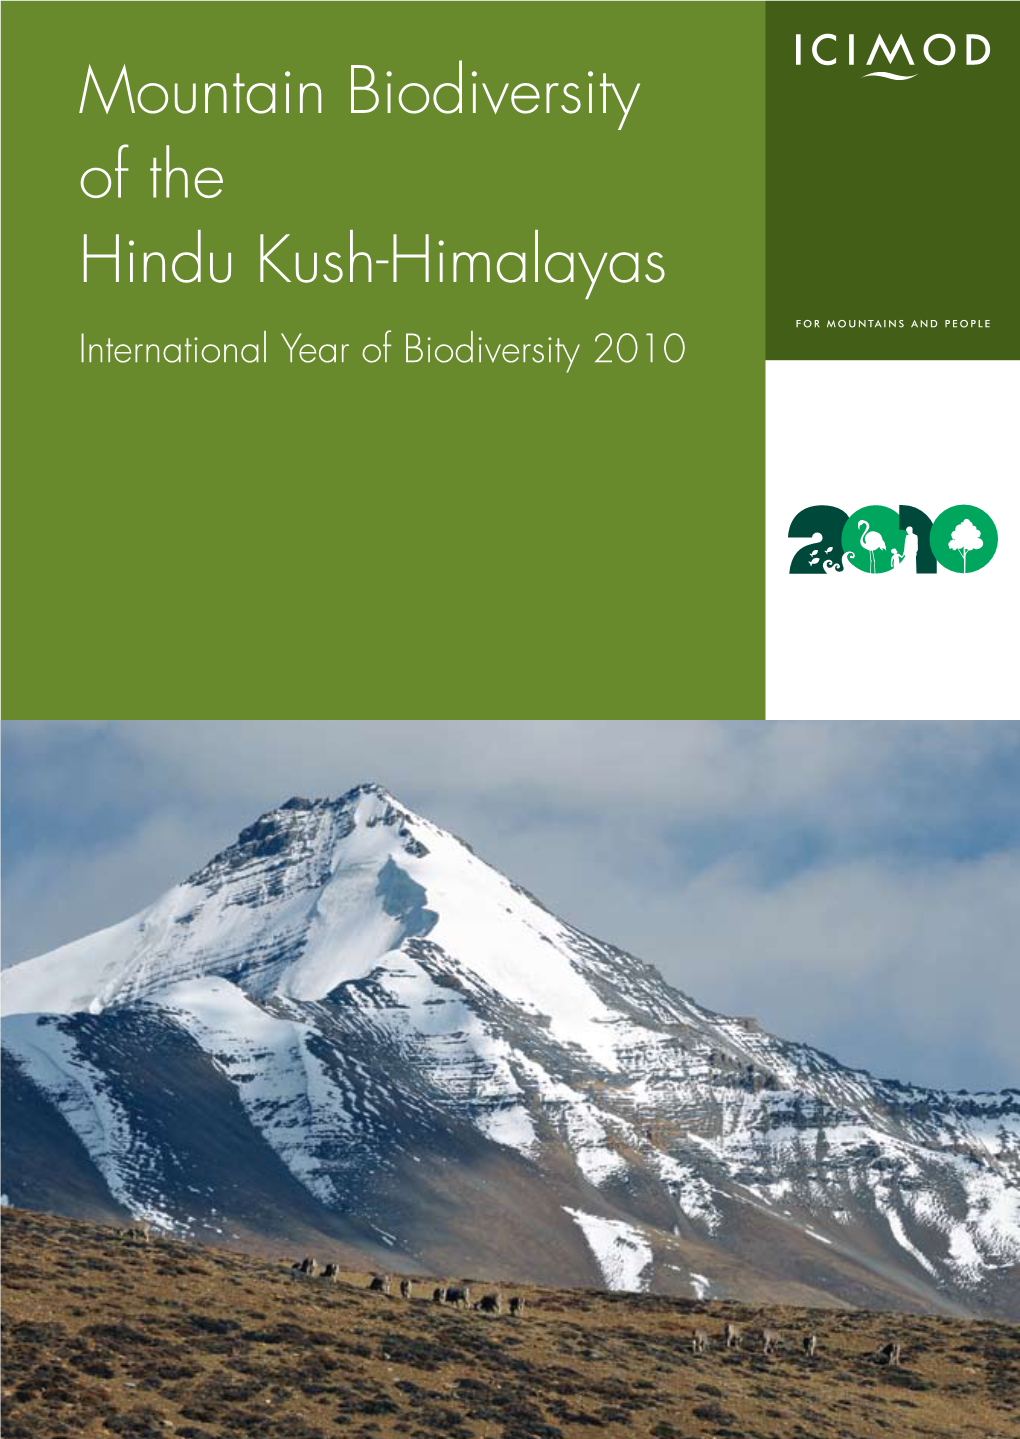 Mountain Biodiversity of the Hindu Kush-Himalayas International Year of Biodiversity 2010 Foreword